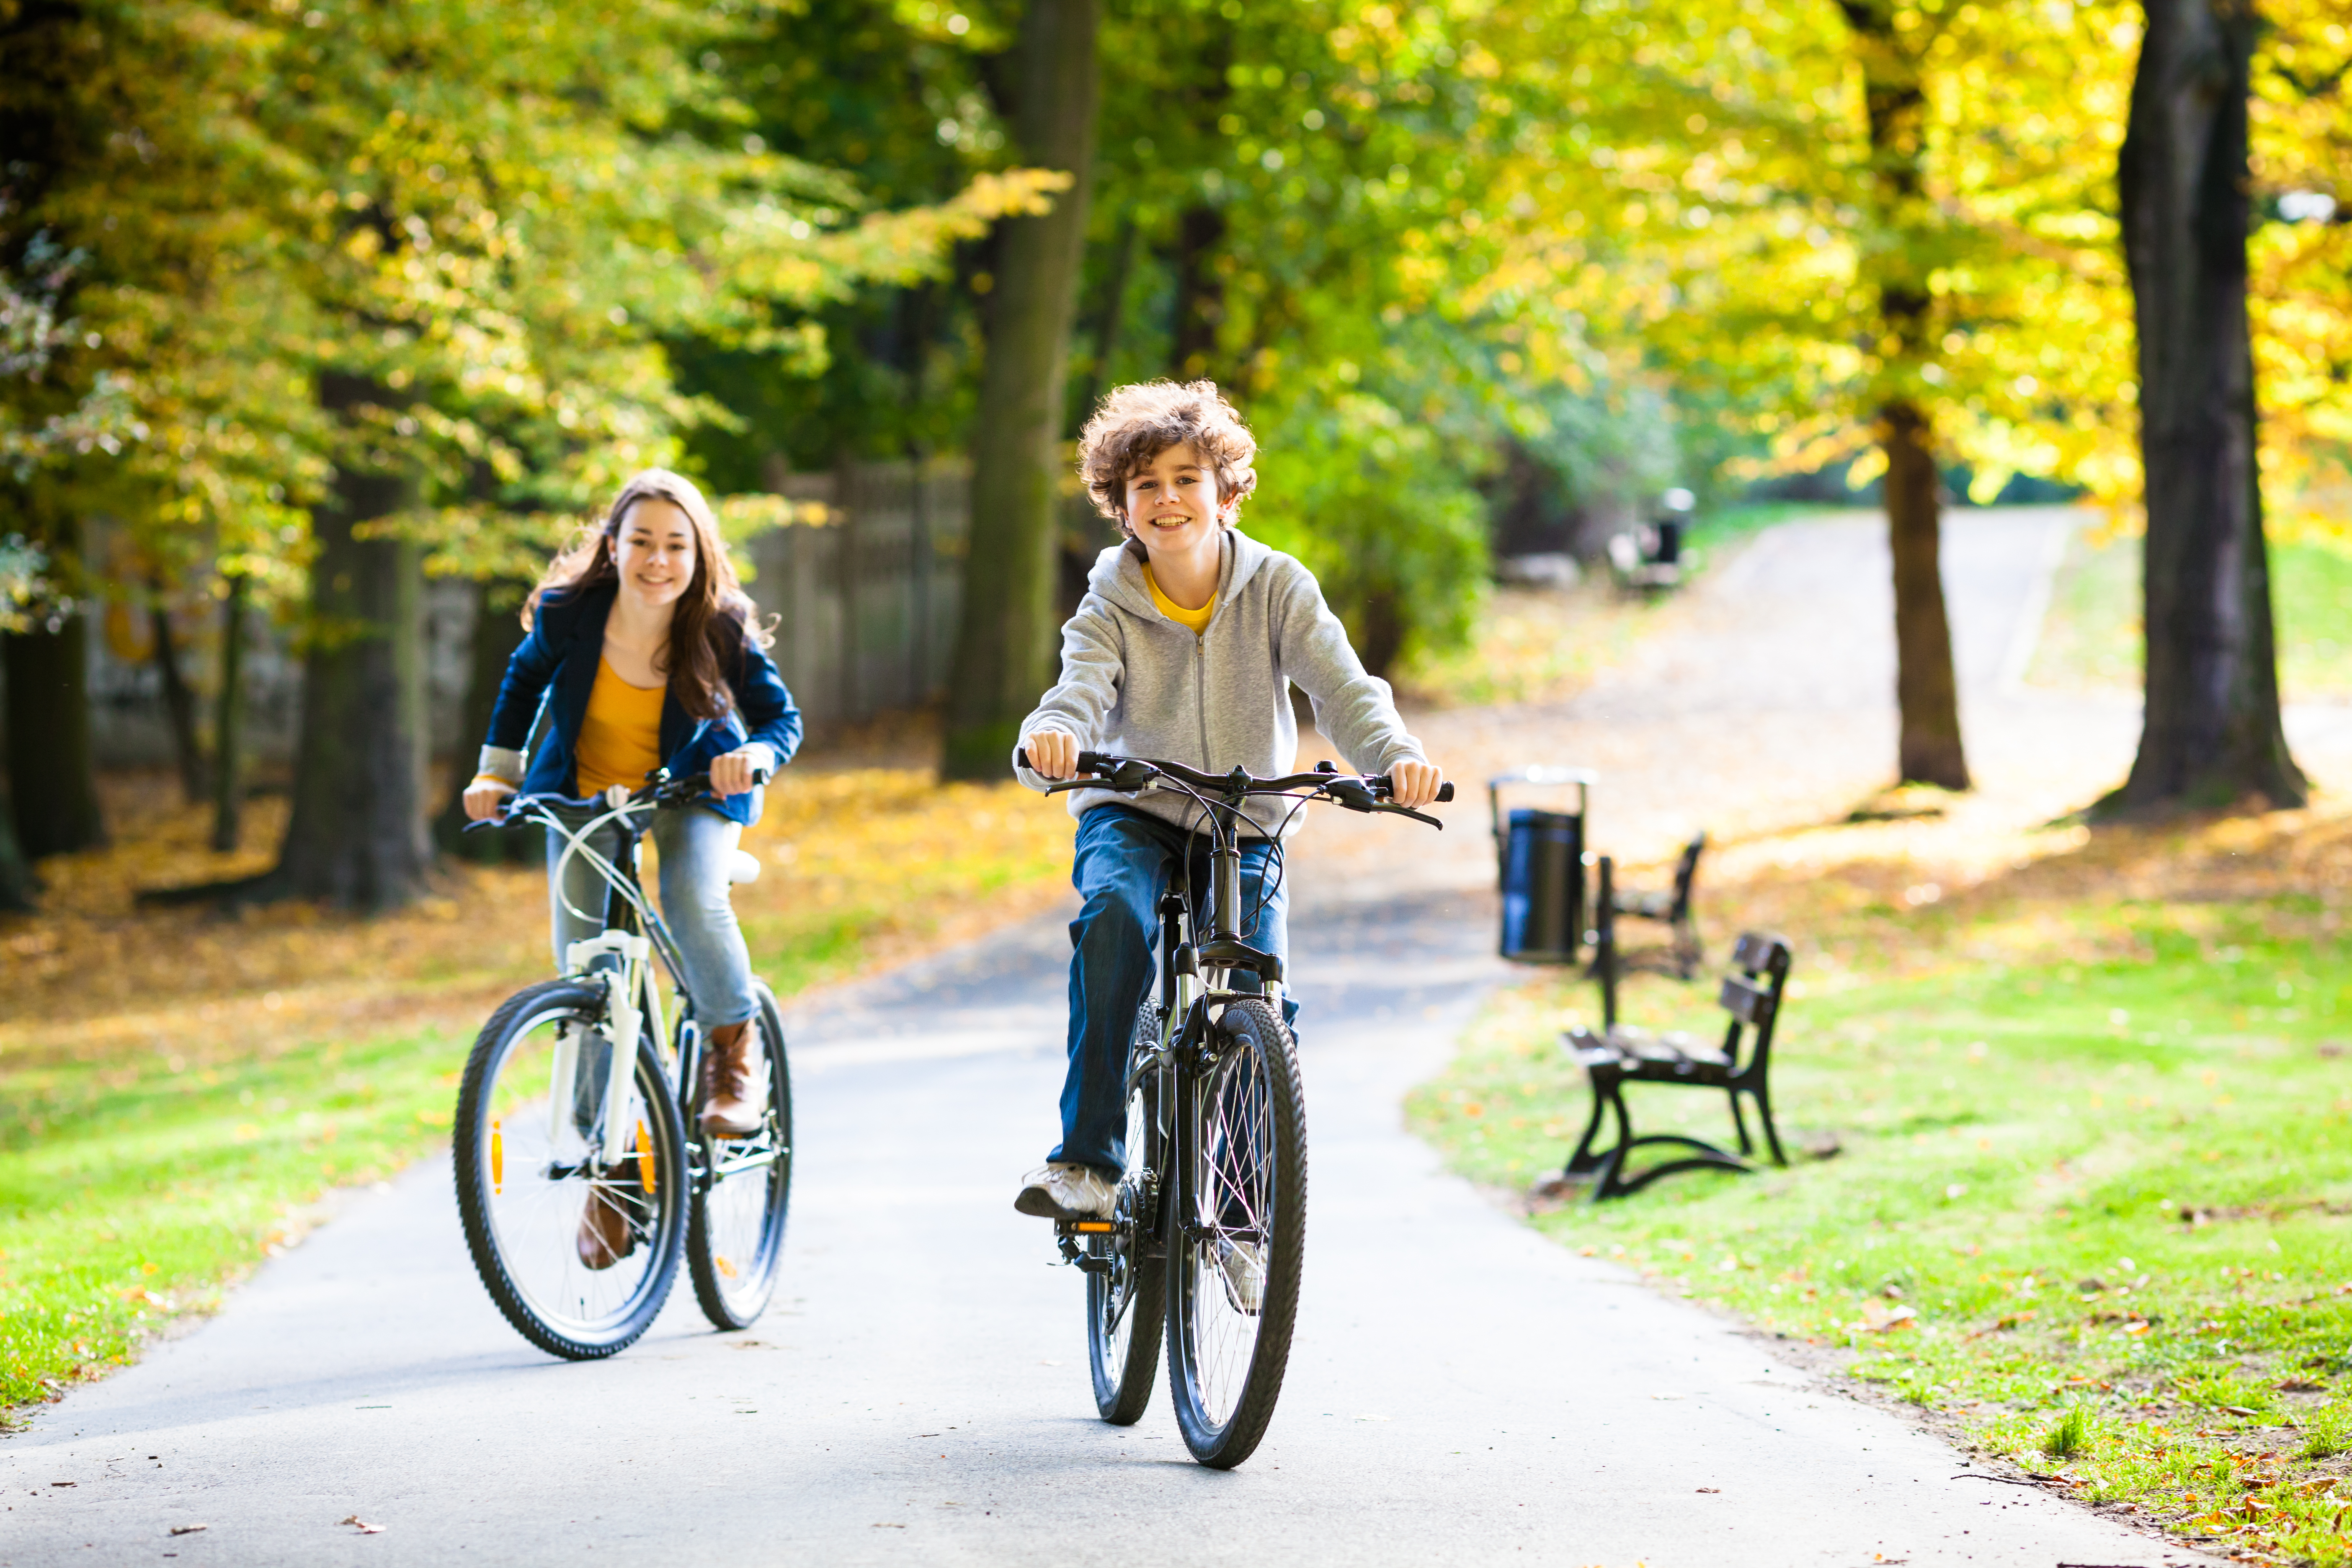 Urban,Biking,-,Teens,And,Bikes,In,City,Park